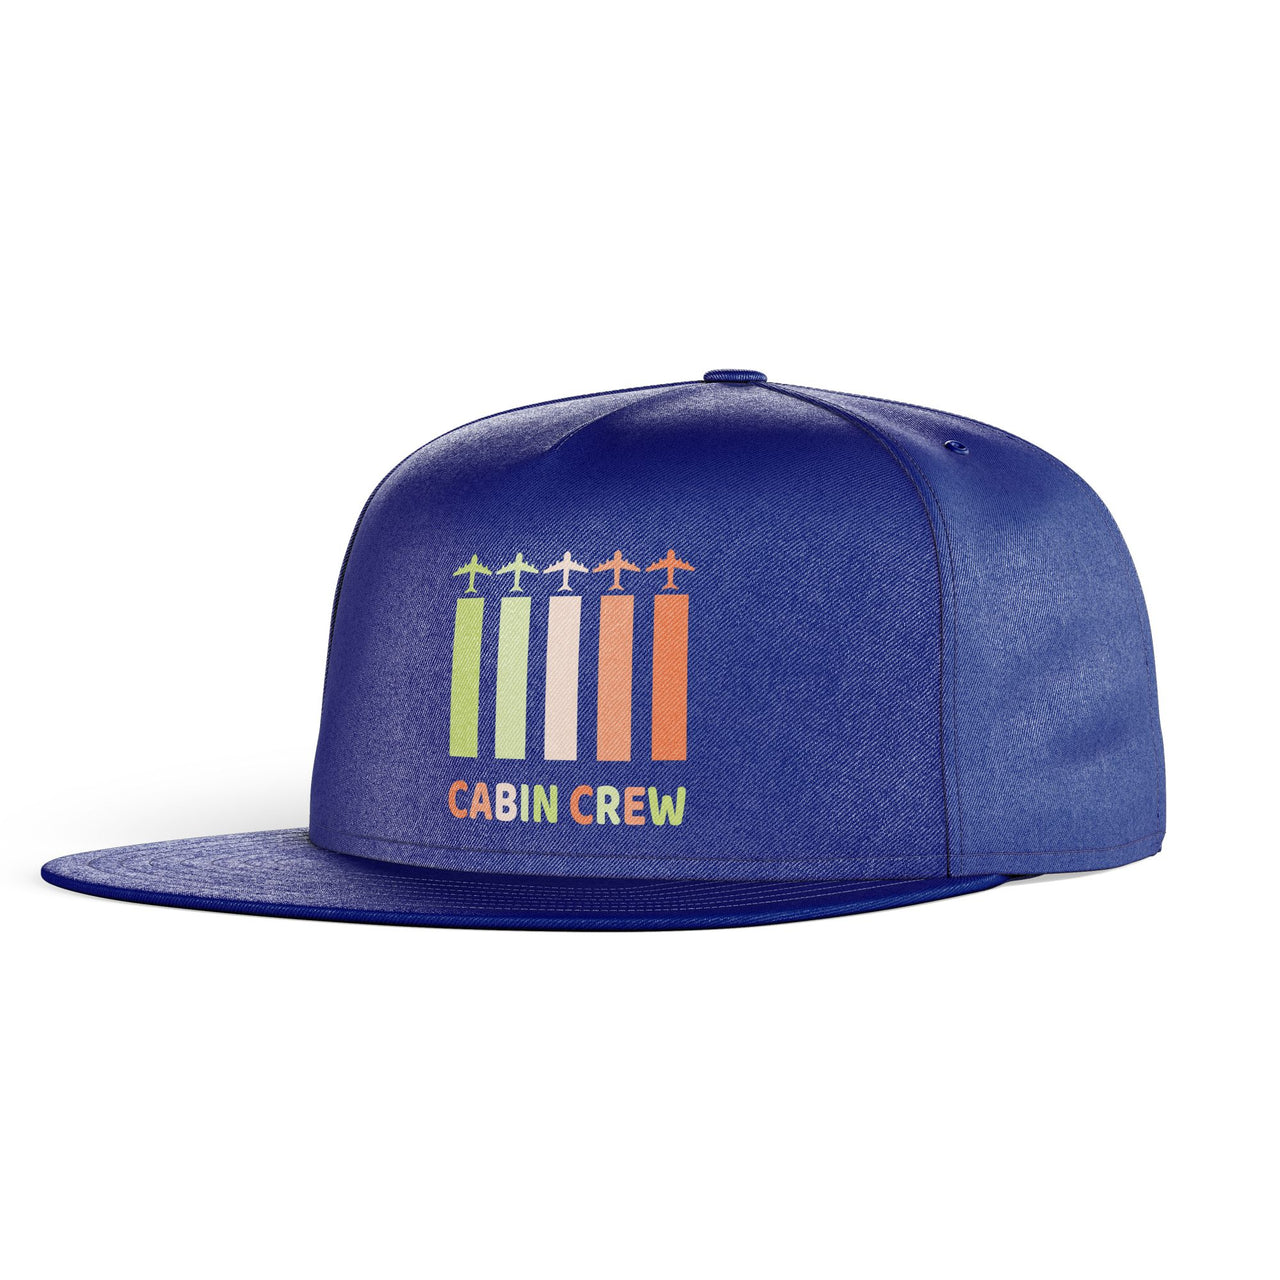 Colourful Cabin Crew Designed Snapback Caps & Hats